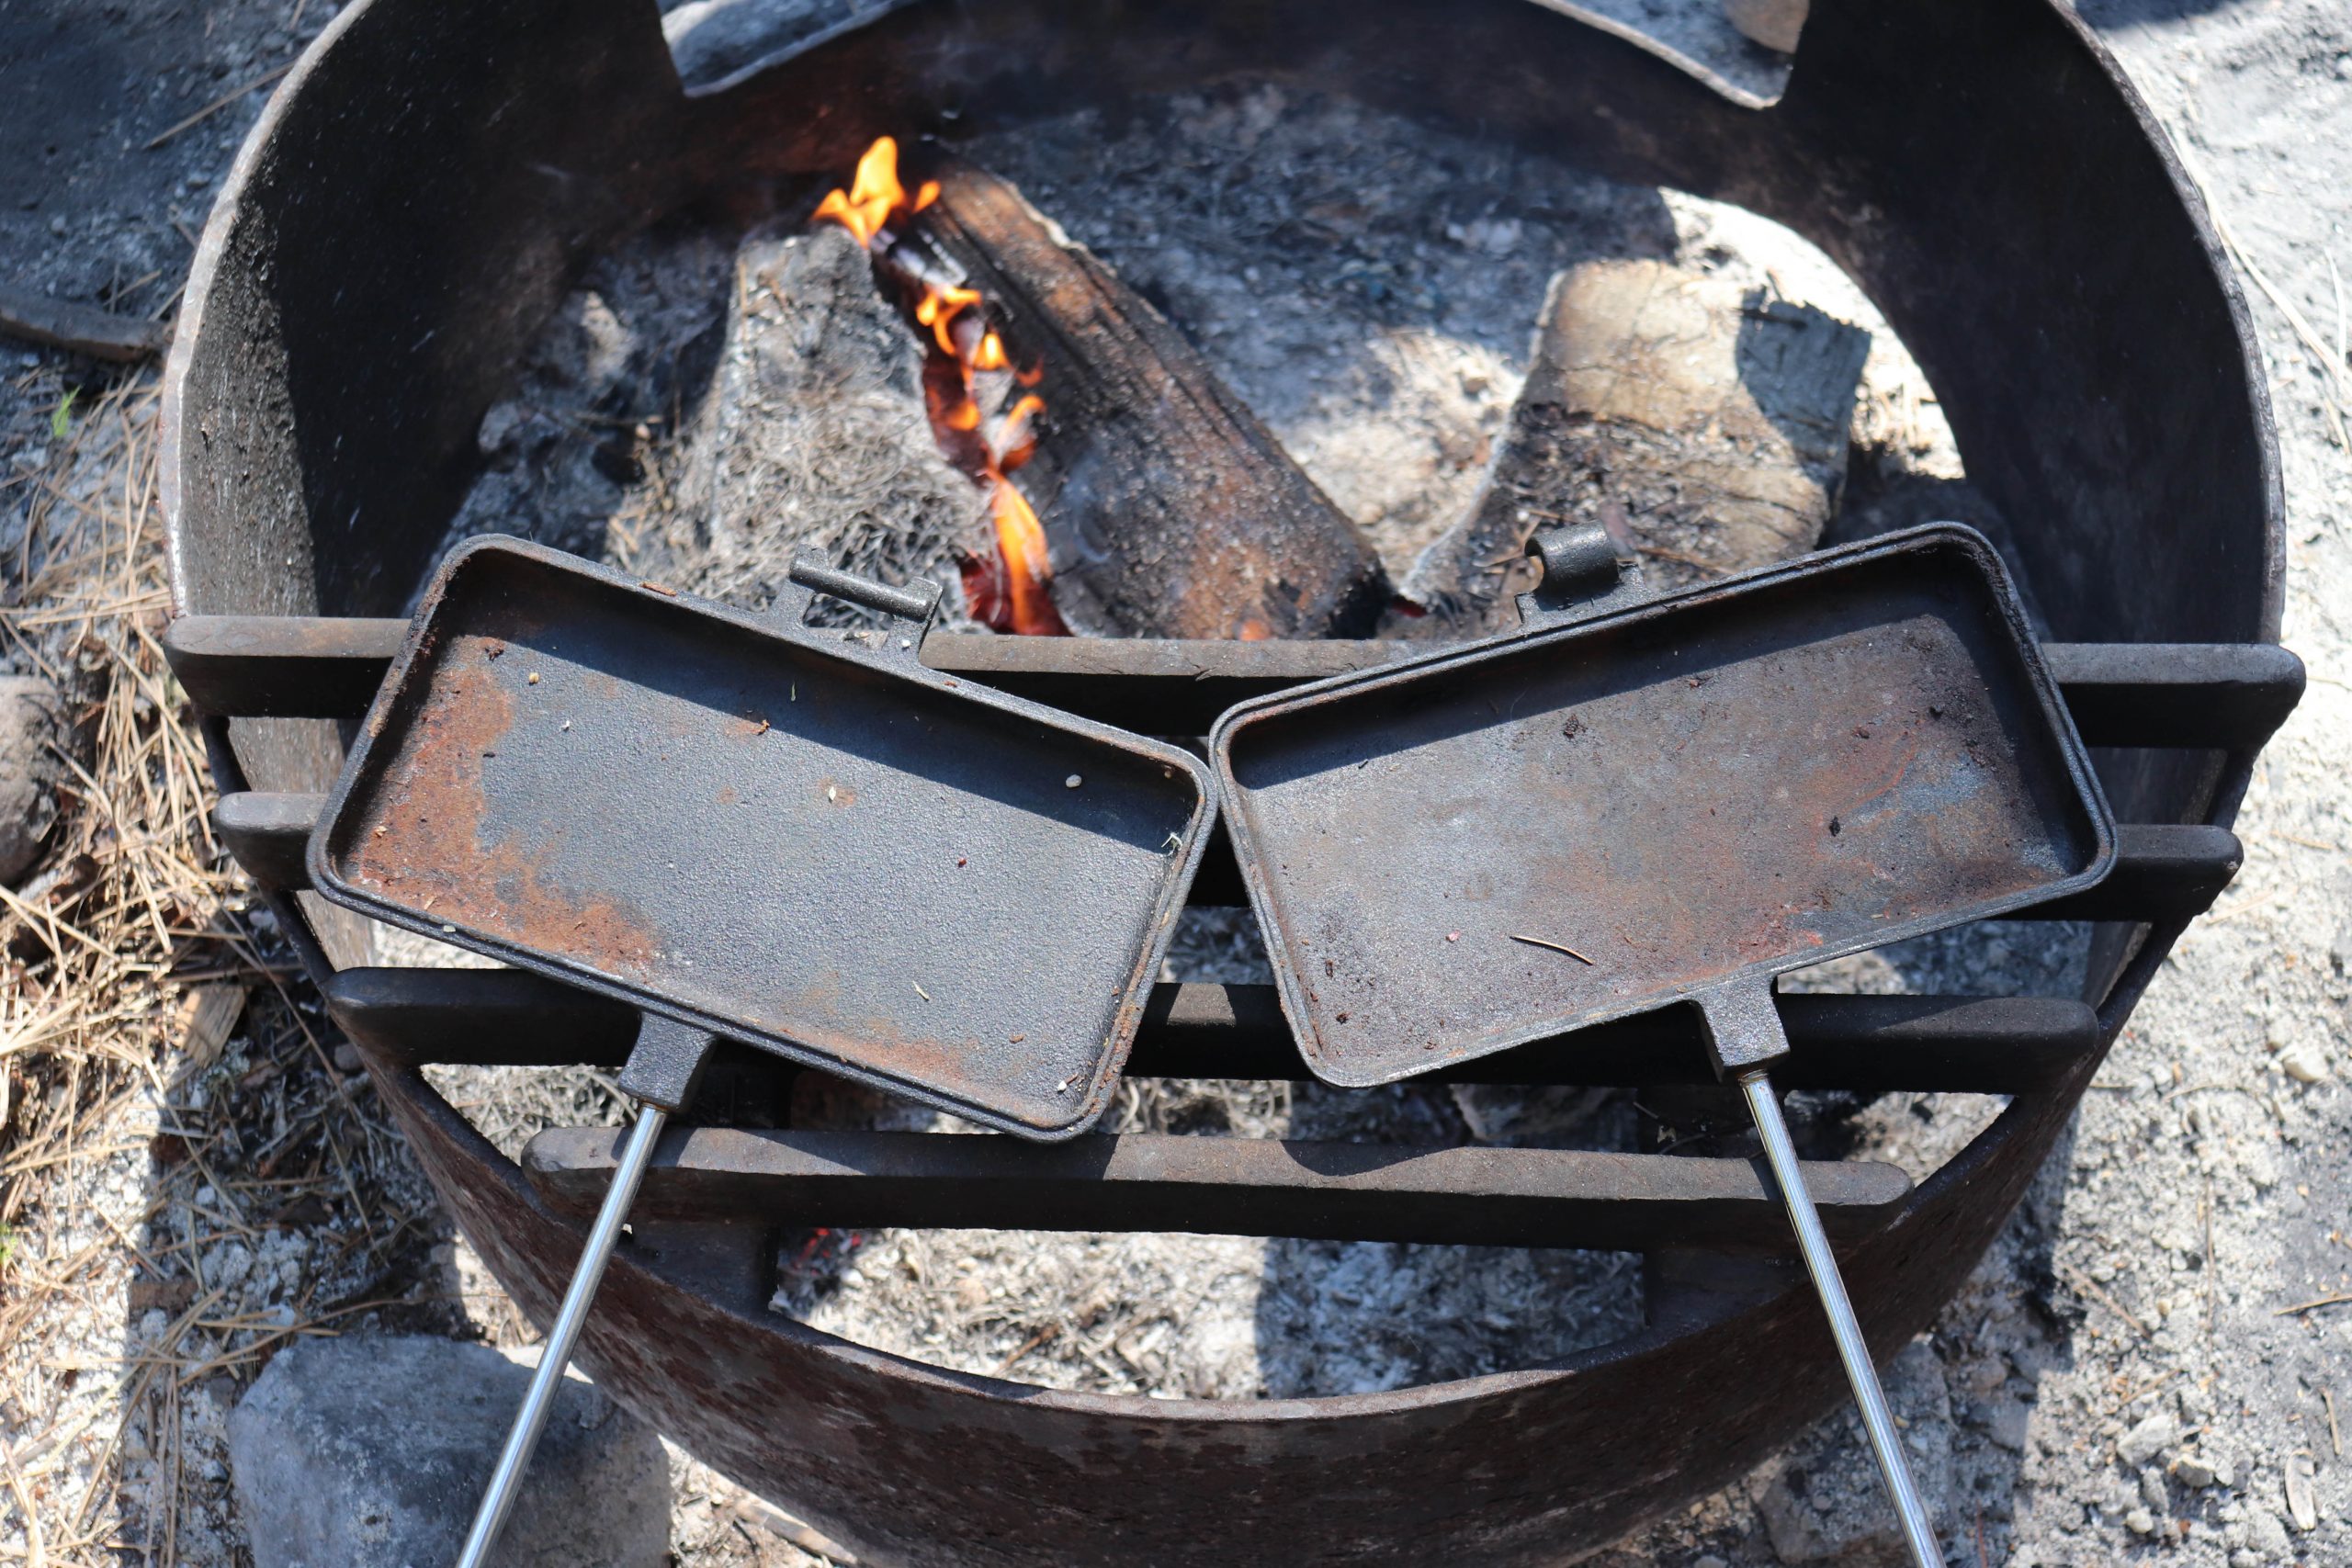 How to Season a Pie Iron Tutorial » Campfire Foodie